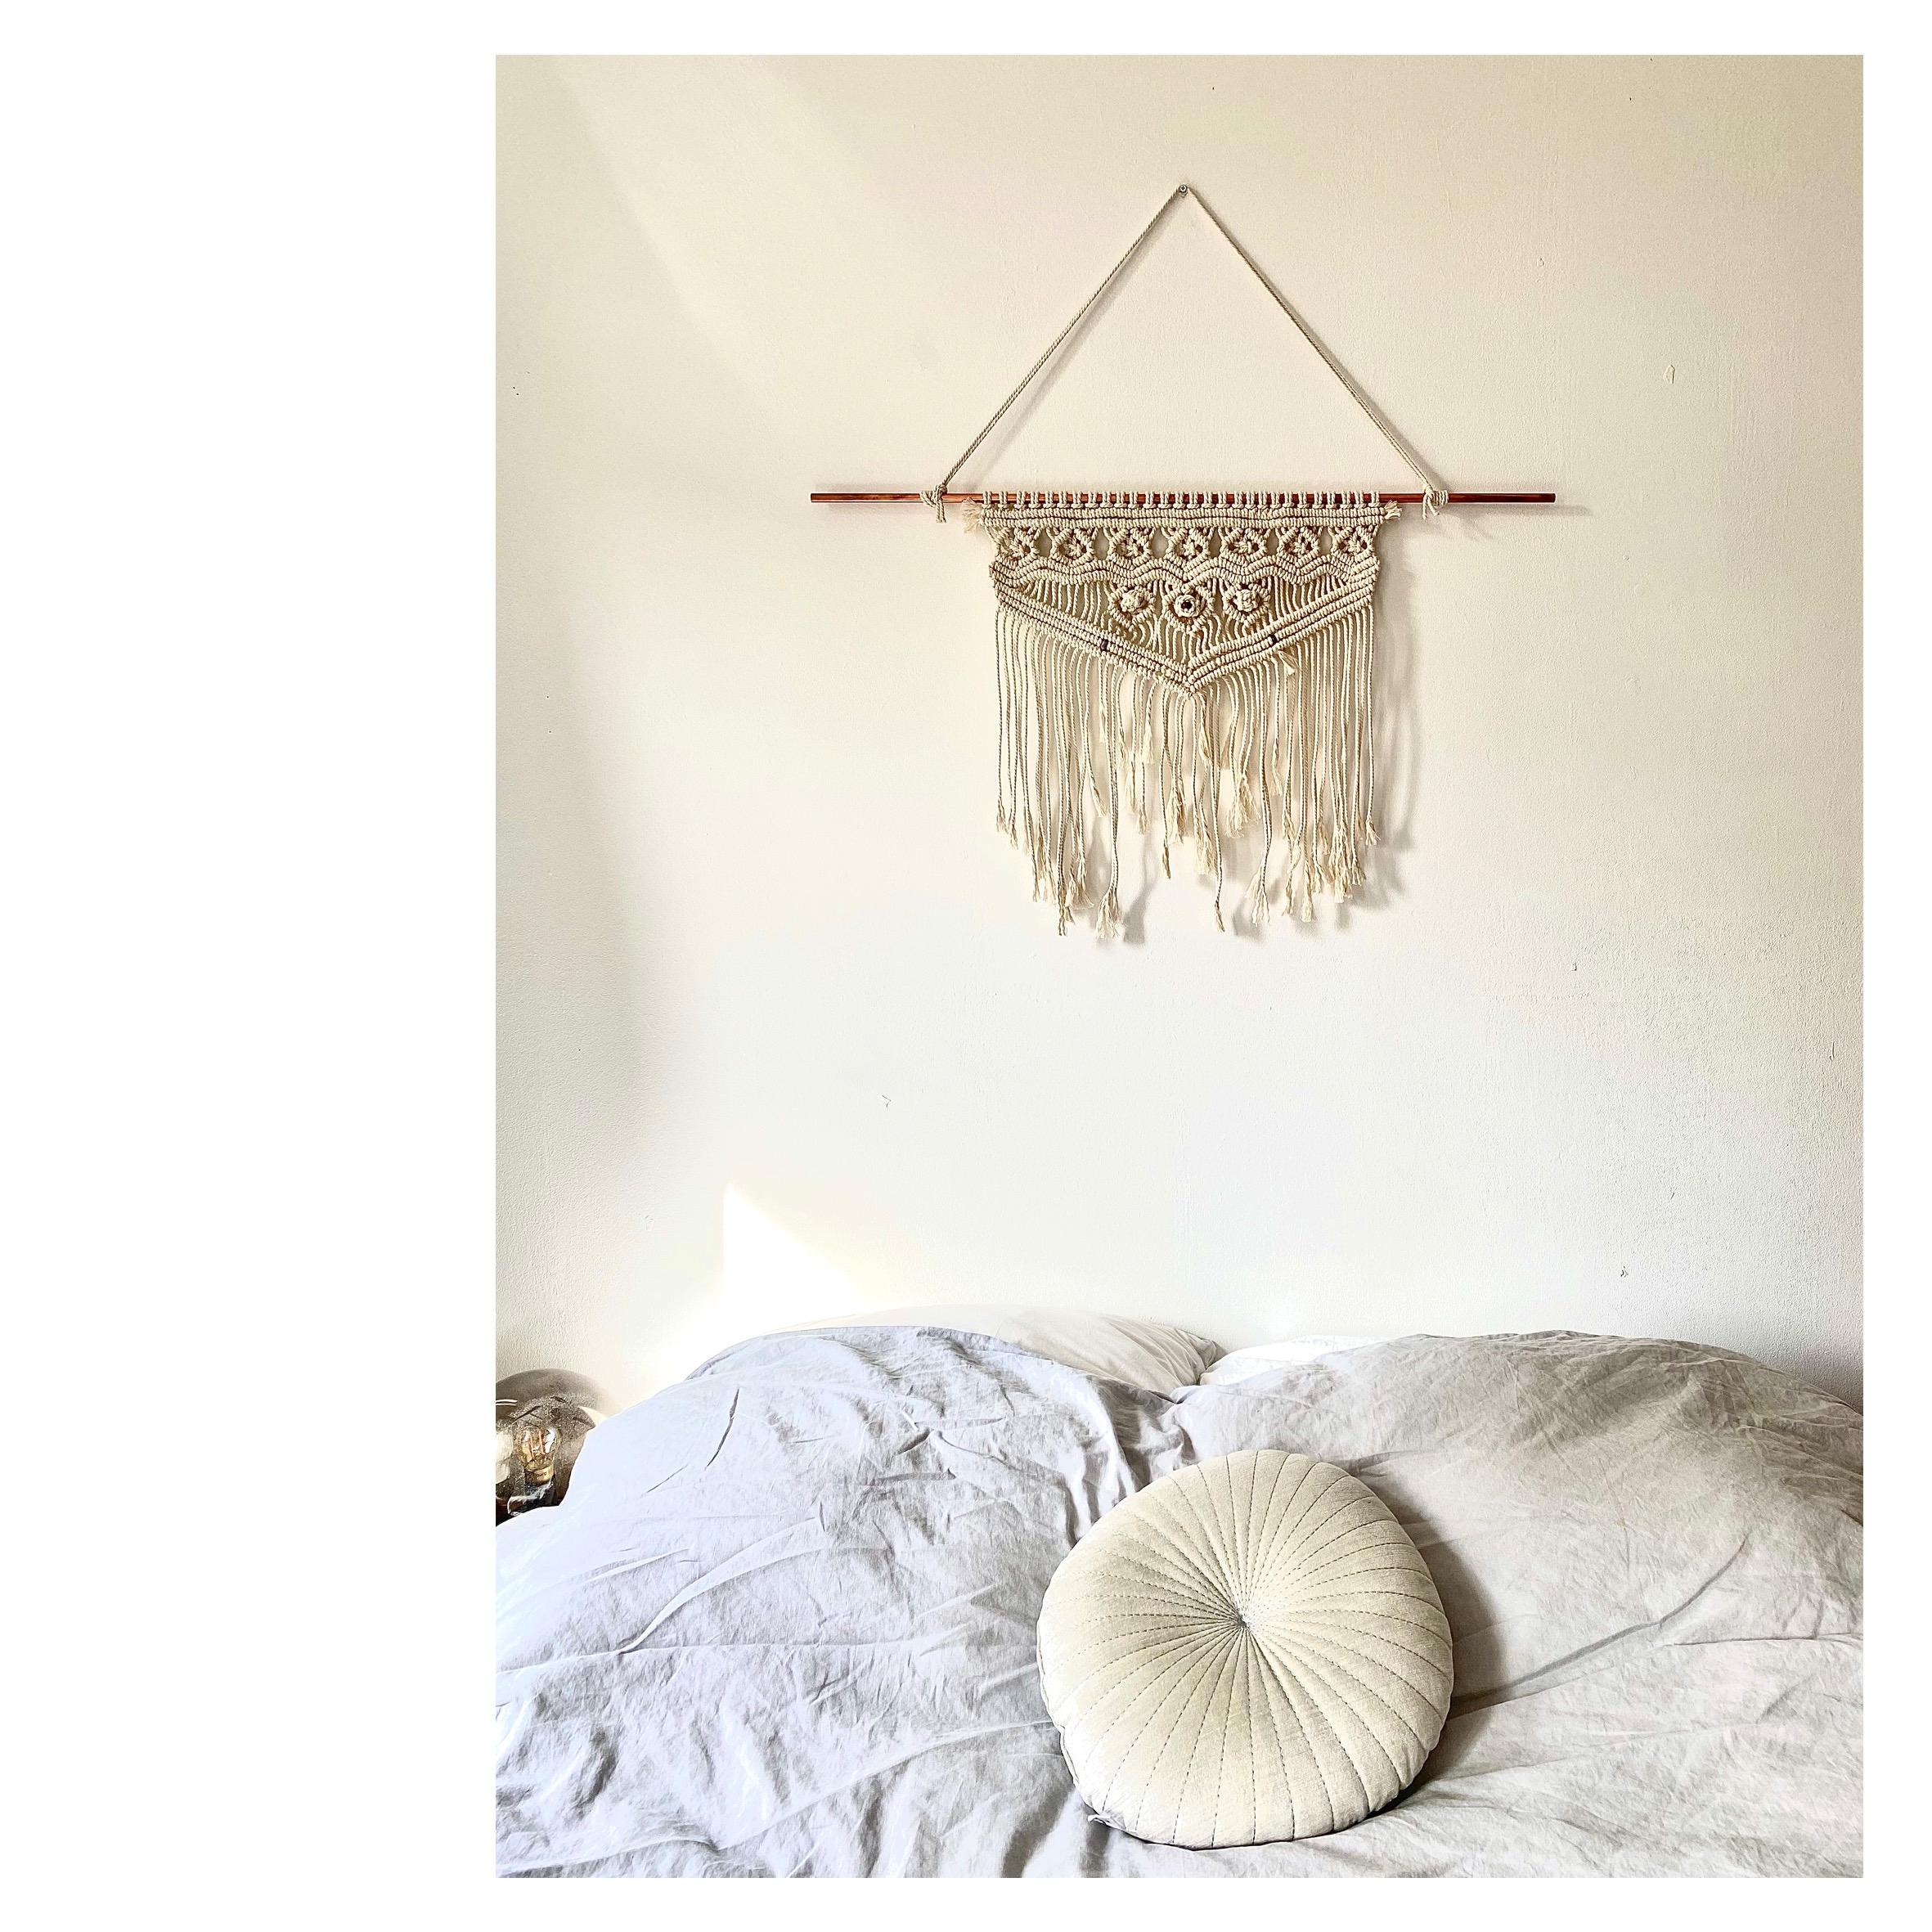 Mein selbstgemachter Makramee Wandbehang im Schlafzimmer ✨
#makramee #handmade #bedroom #schlafzimmer #couchstyle